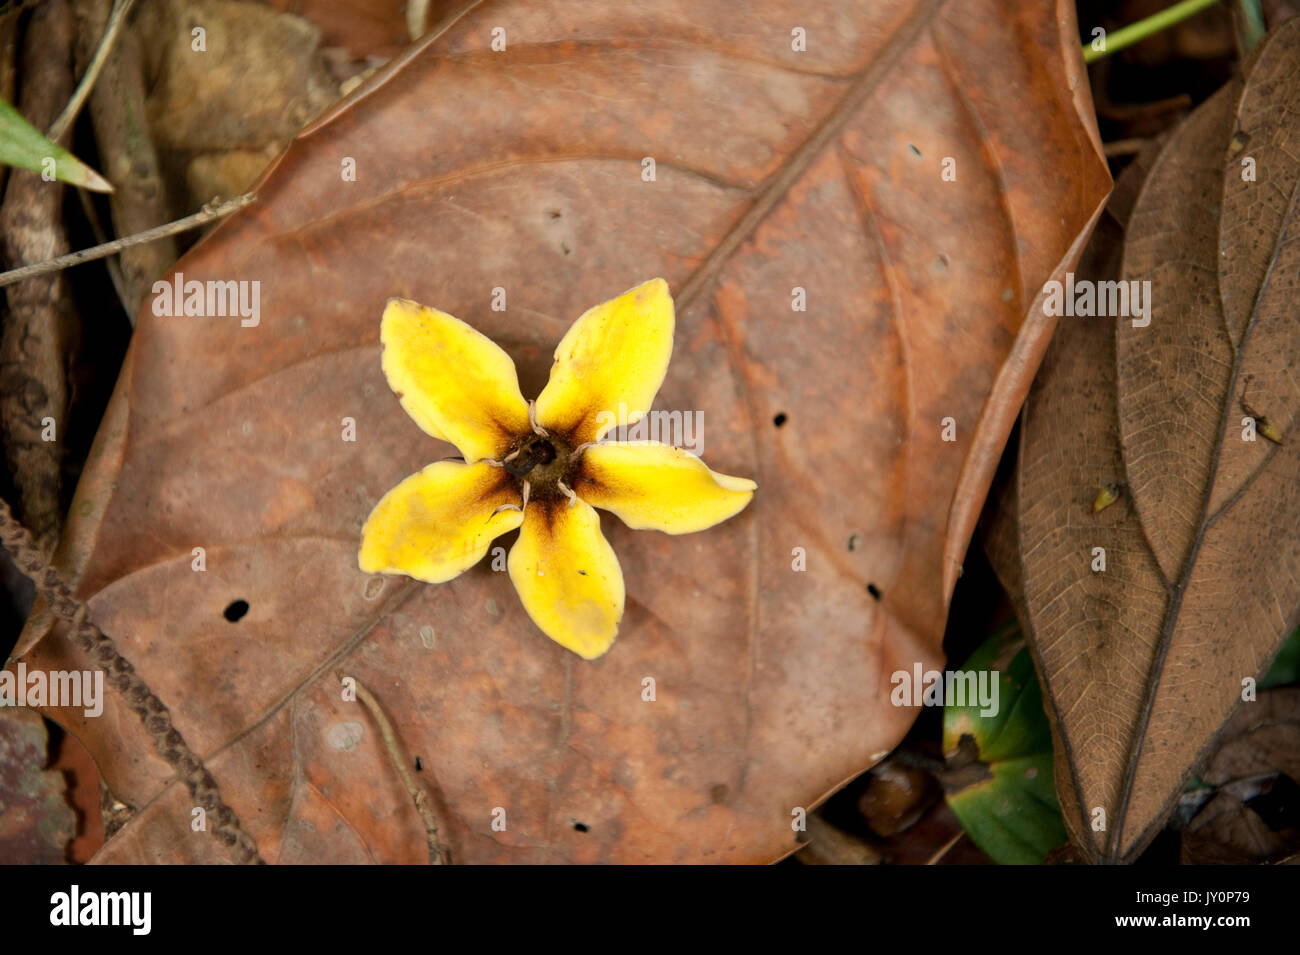 Monkey Comb, Apeiba membranacea, Tiliaceae, Panama, flower on forest floor, Panama, Central America, Barro Colorado Island Stock Photo